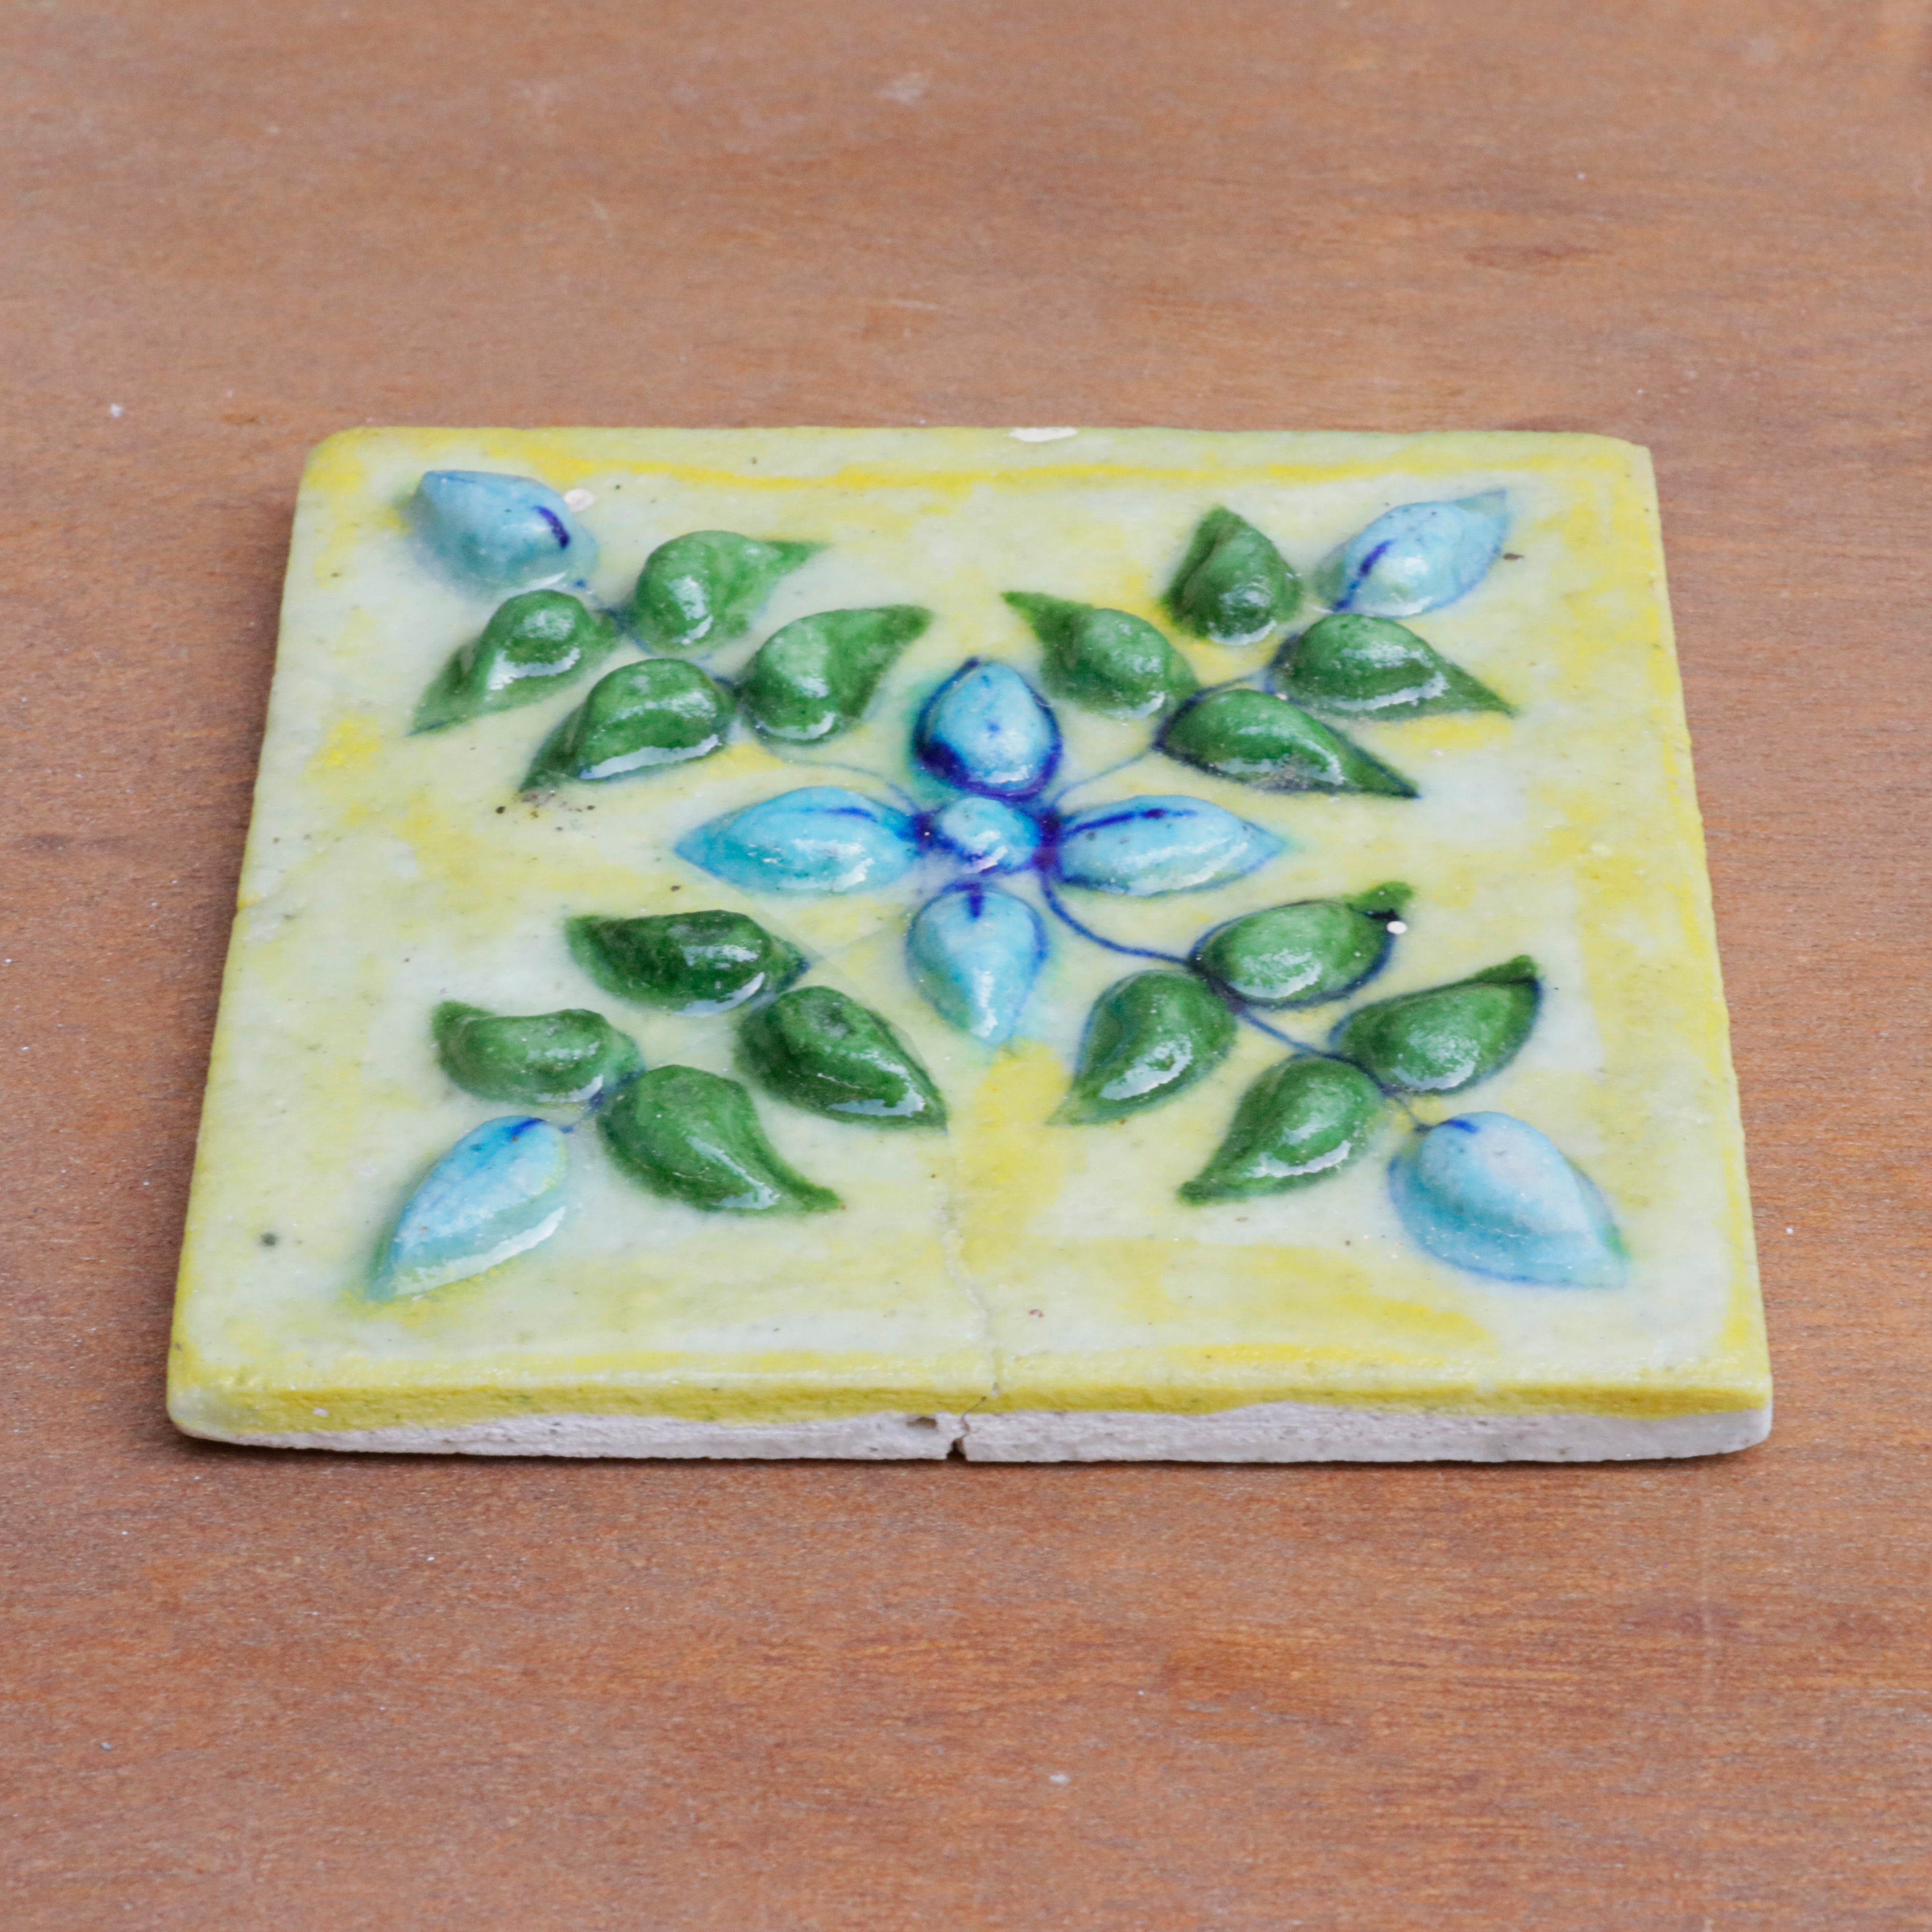 Evergreen Rich Embossed Flowered Designed Ceramic Square Tile Set of 2 Ceramic Tile